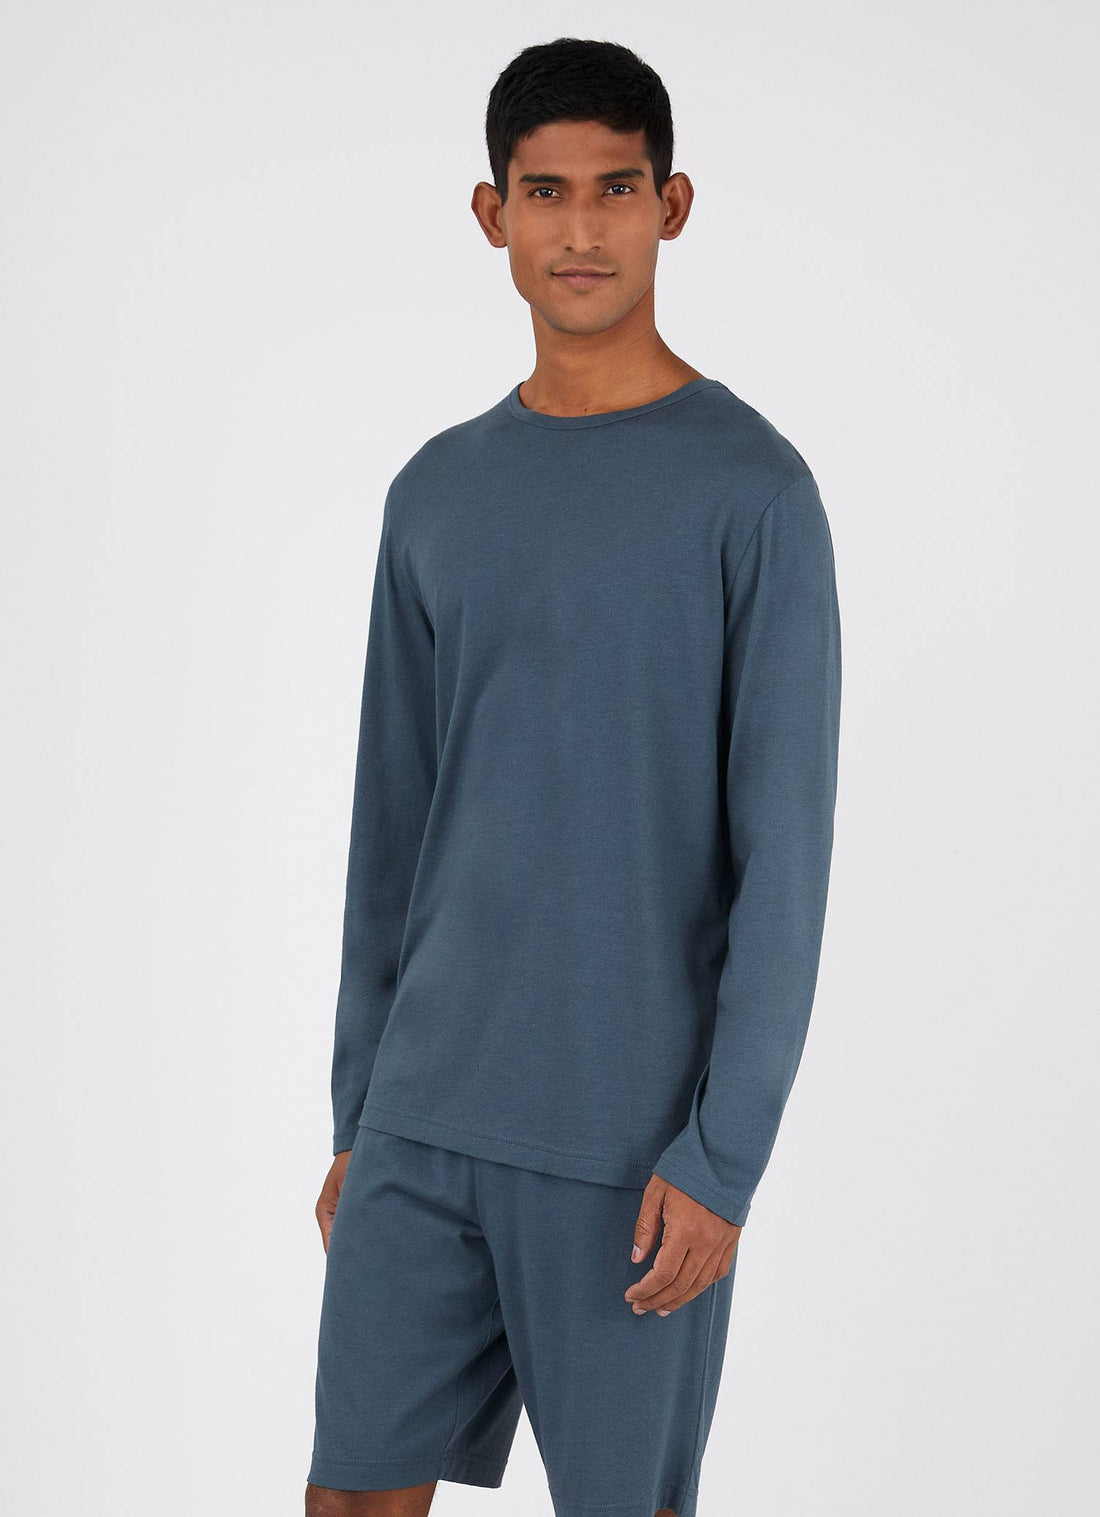 Men's Cotton Modal Lounge Long Sleeve T-shirt in Dark Petrol